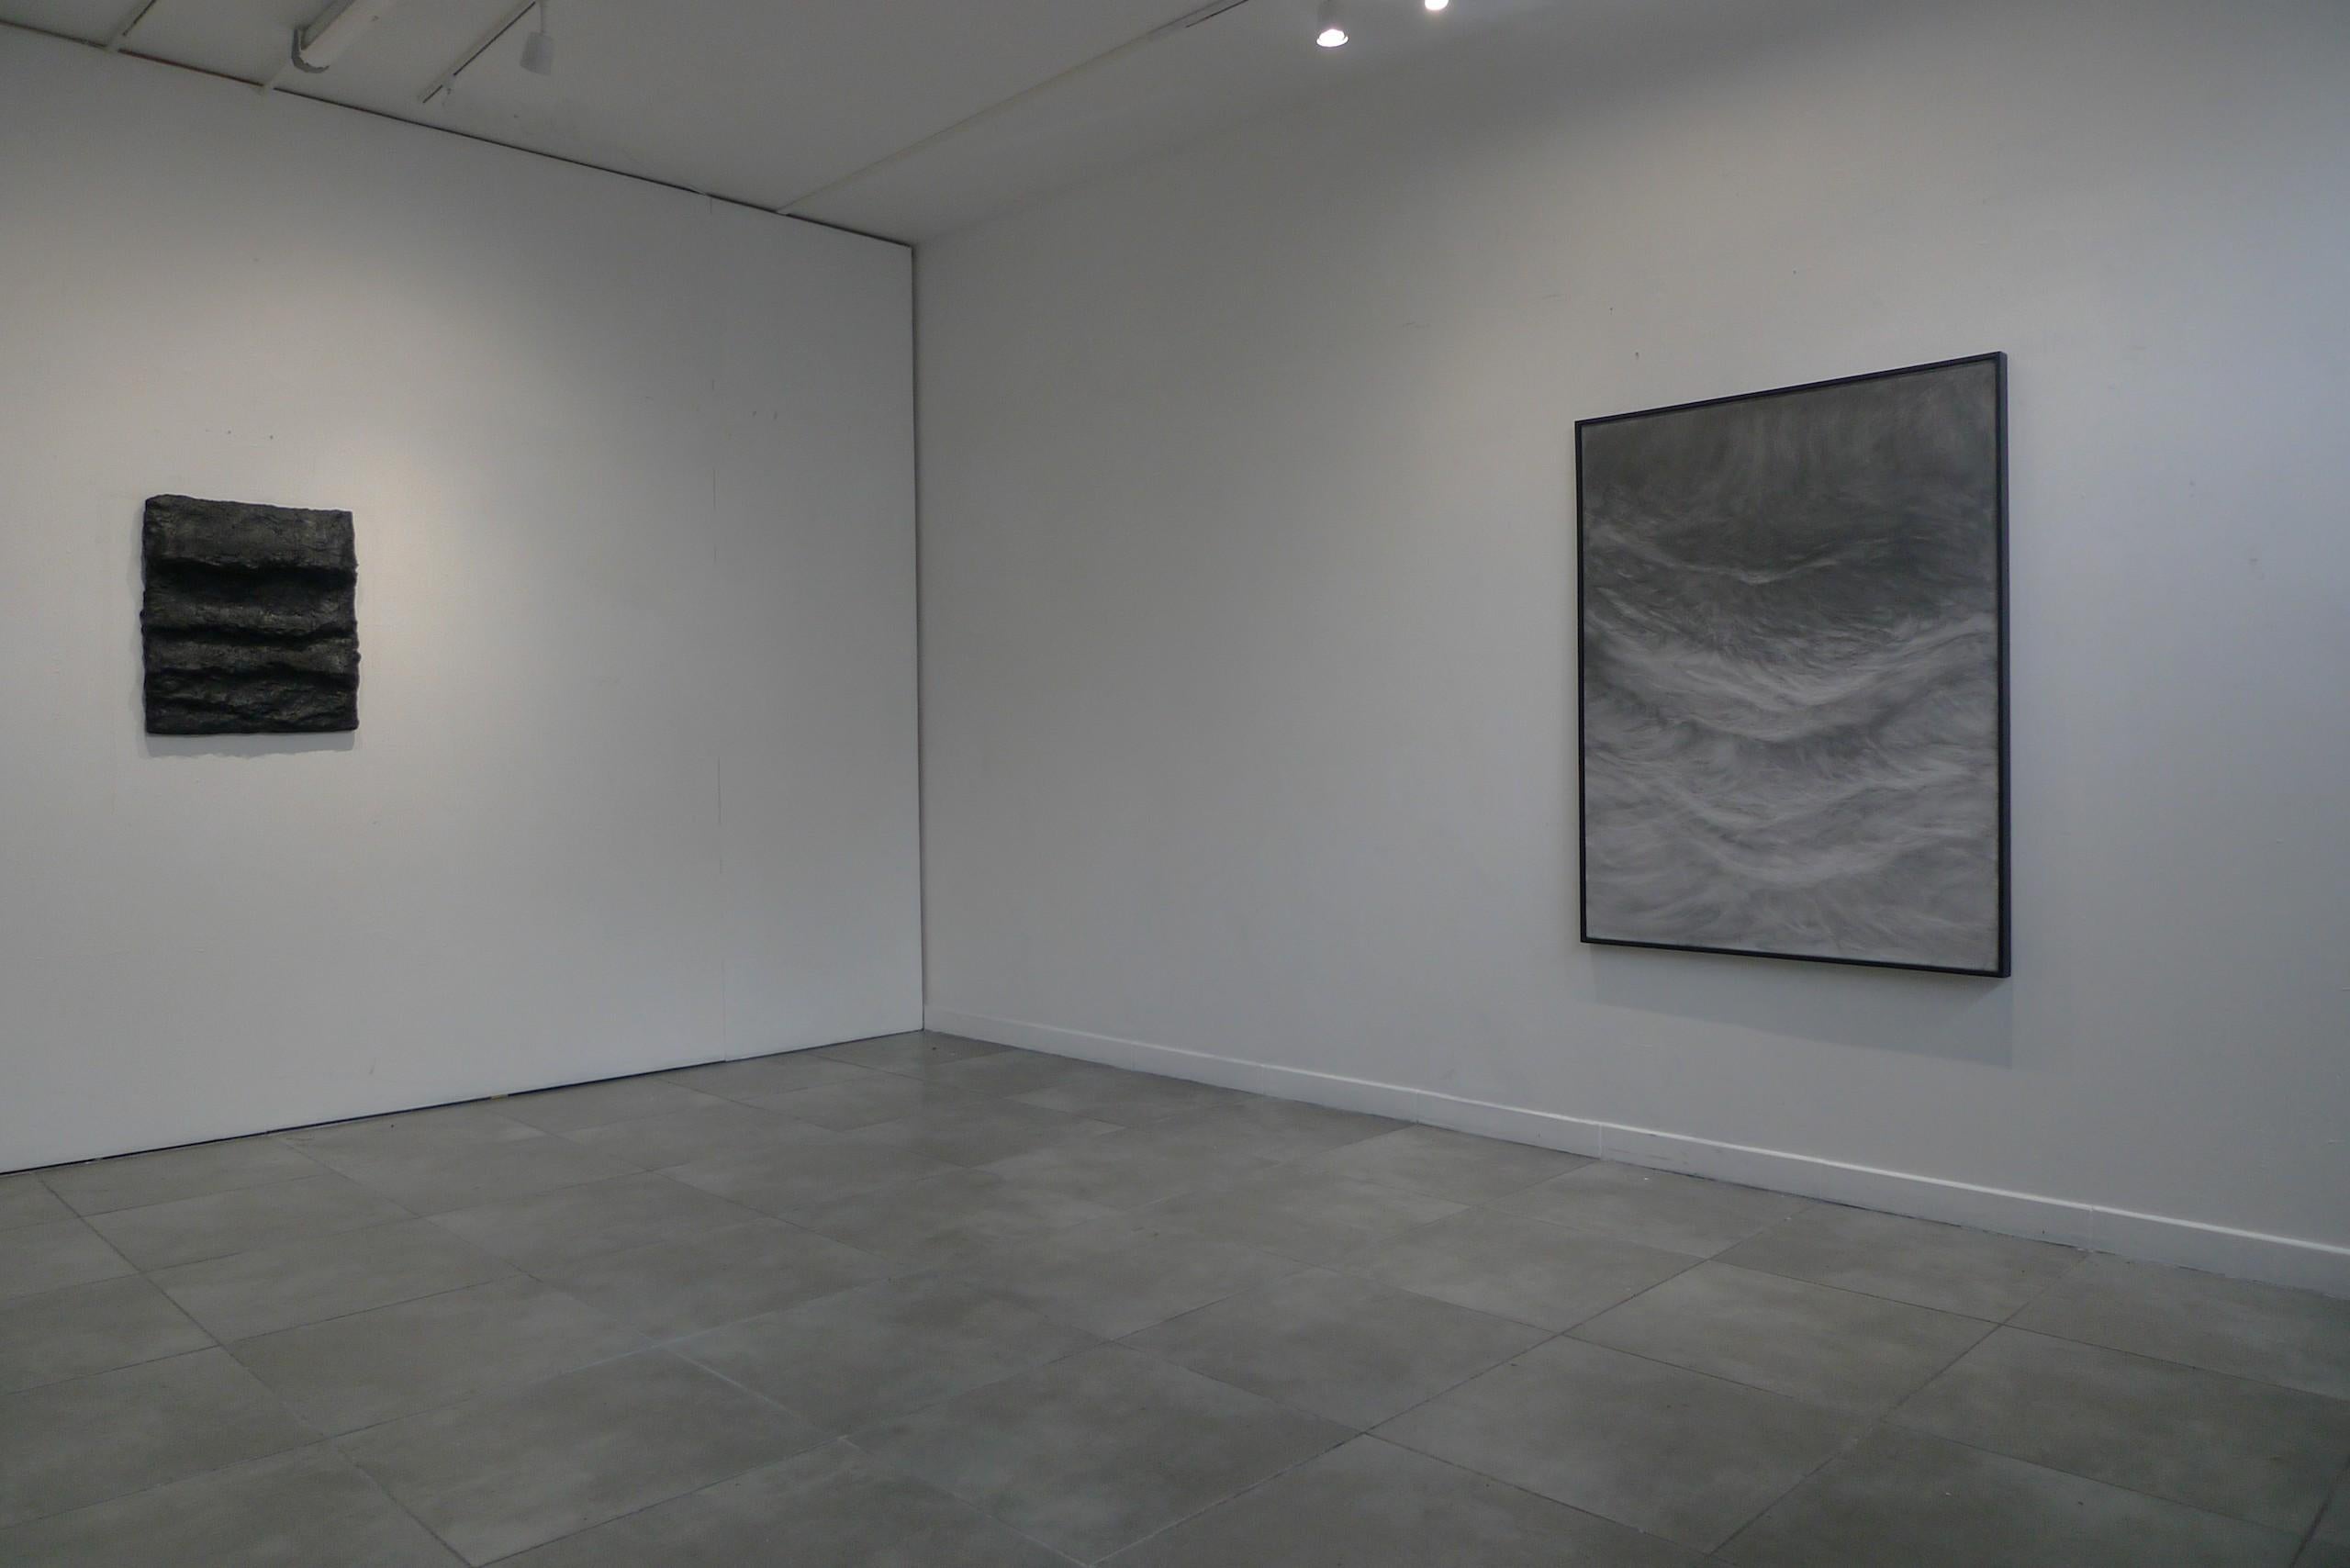 Waves by Franco Salas Borquez - Contemporary seascape painting, ocean, dark tone For Sale 6